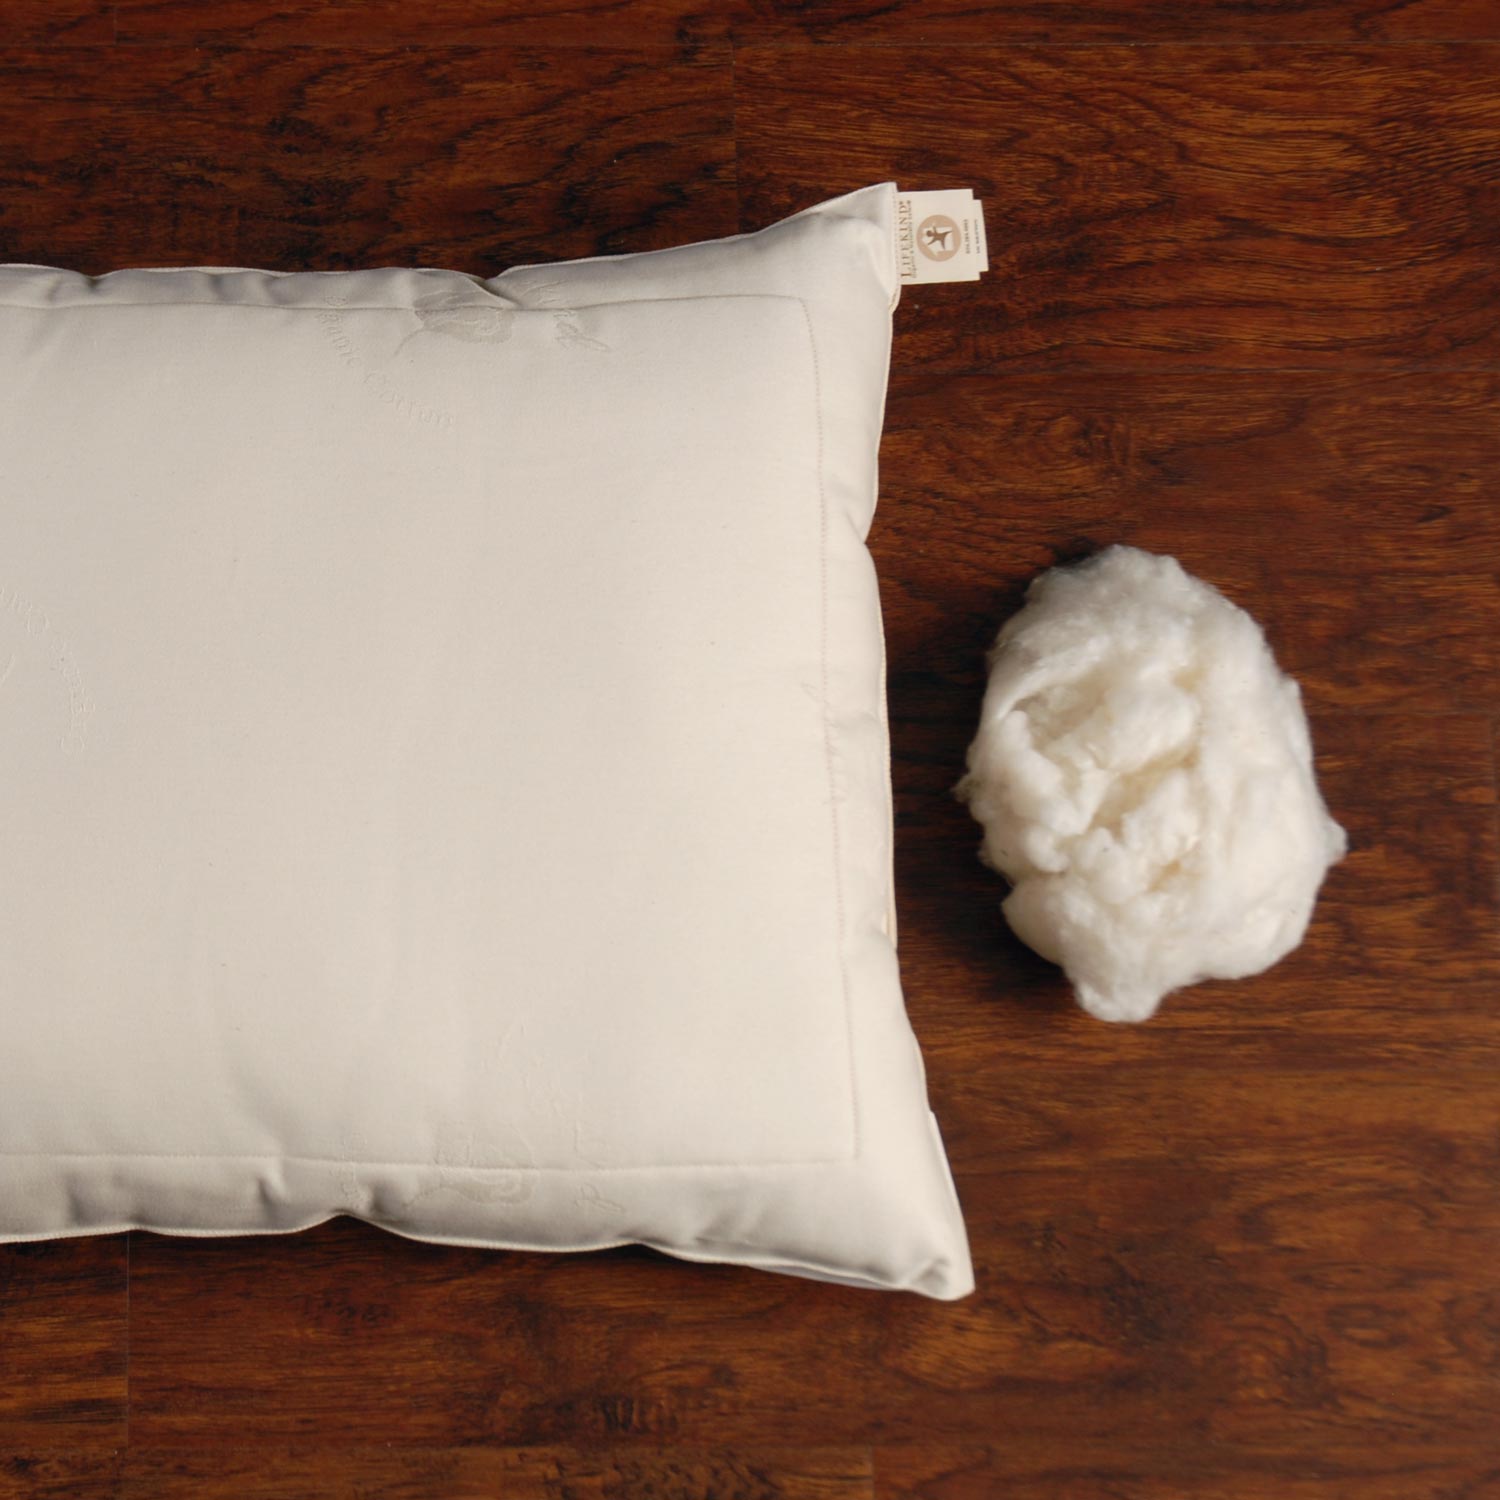 organic cotton pillows